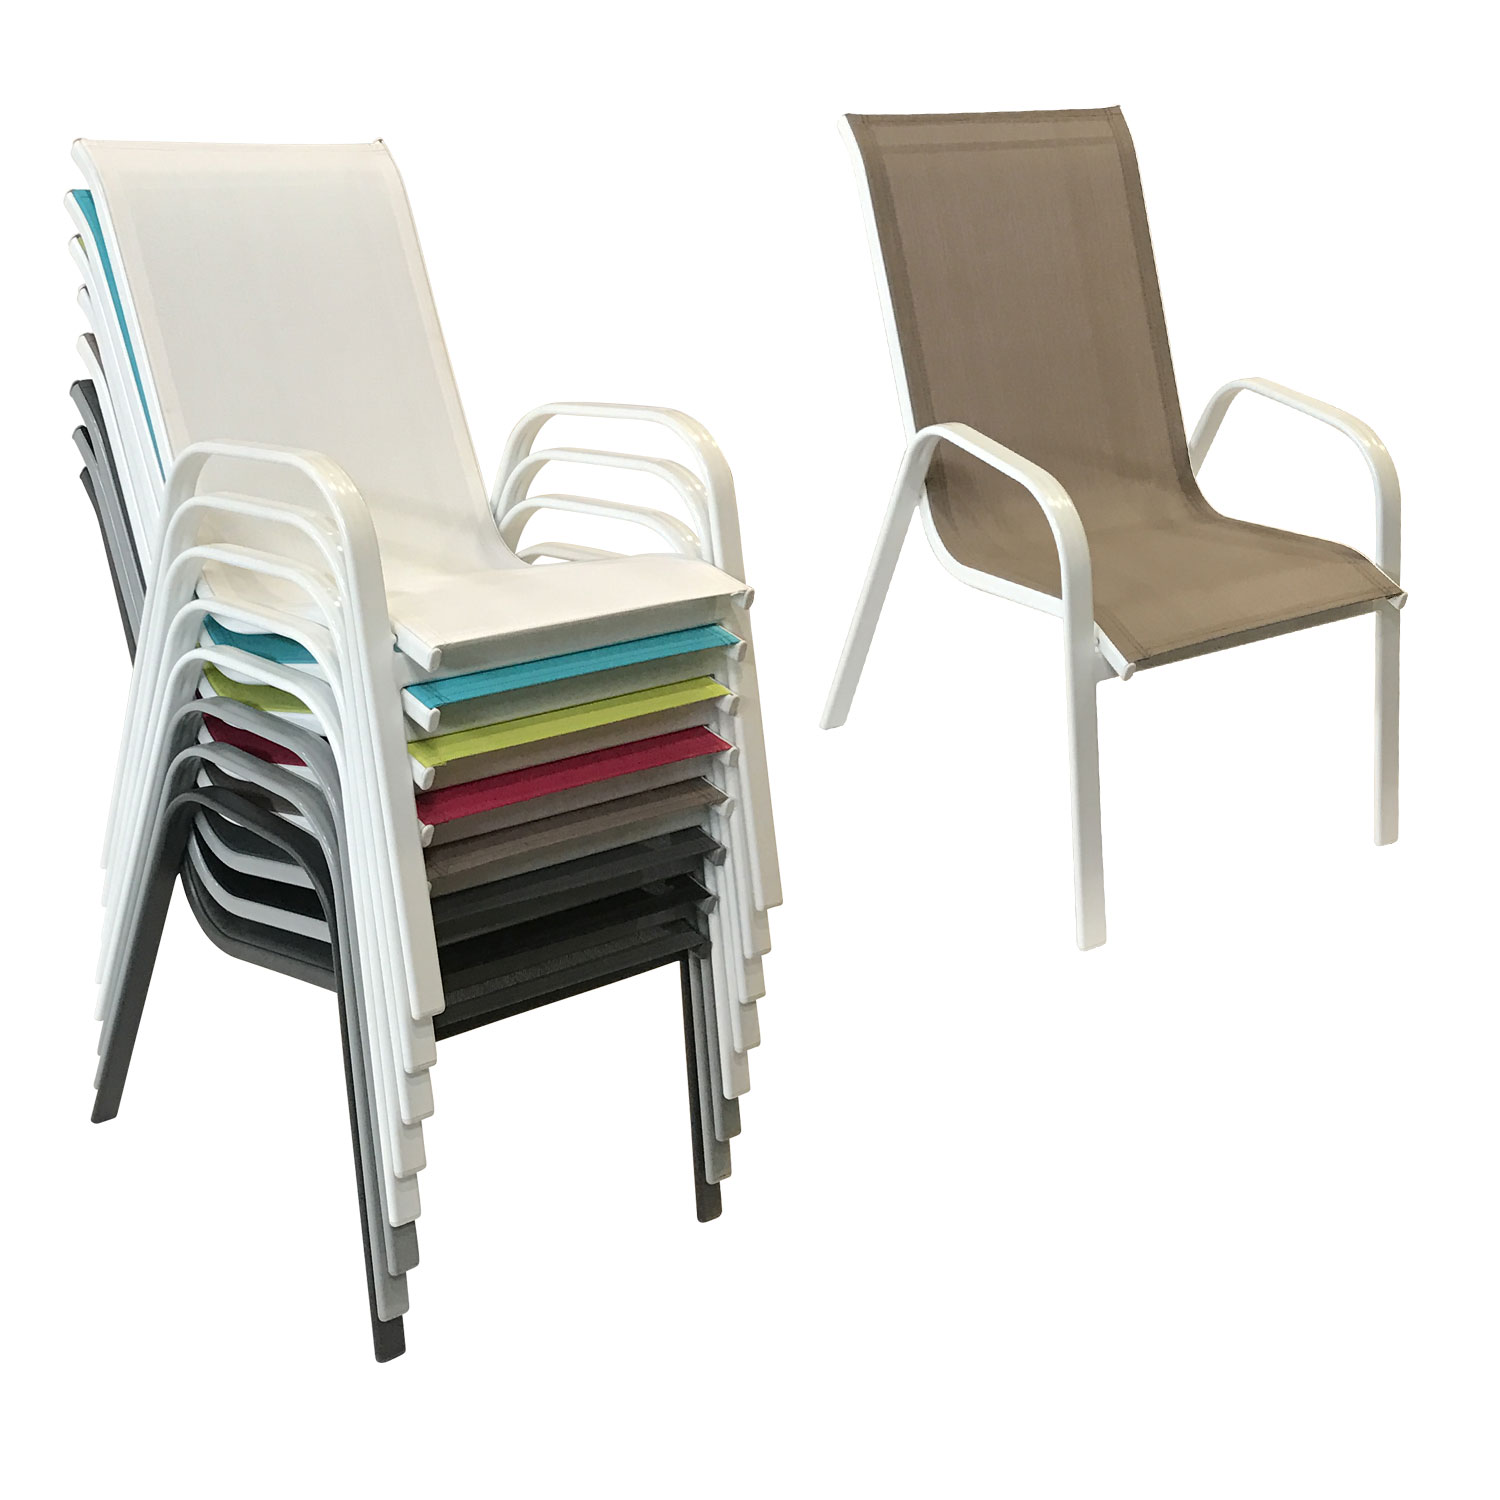 Conjunto de 8 cadeiras MARBELLA em taupe textilene - alumínio branco